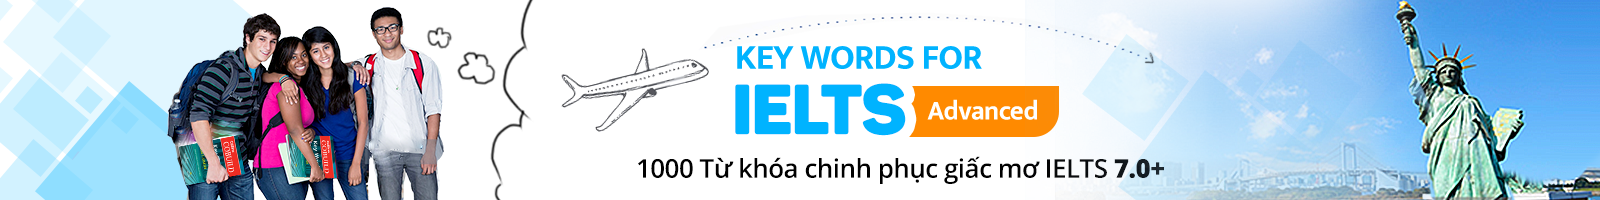 KEY WORDS FOR IELTS (Advanced)